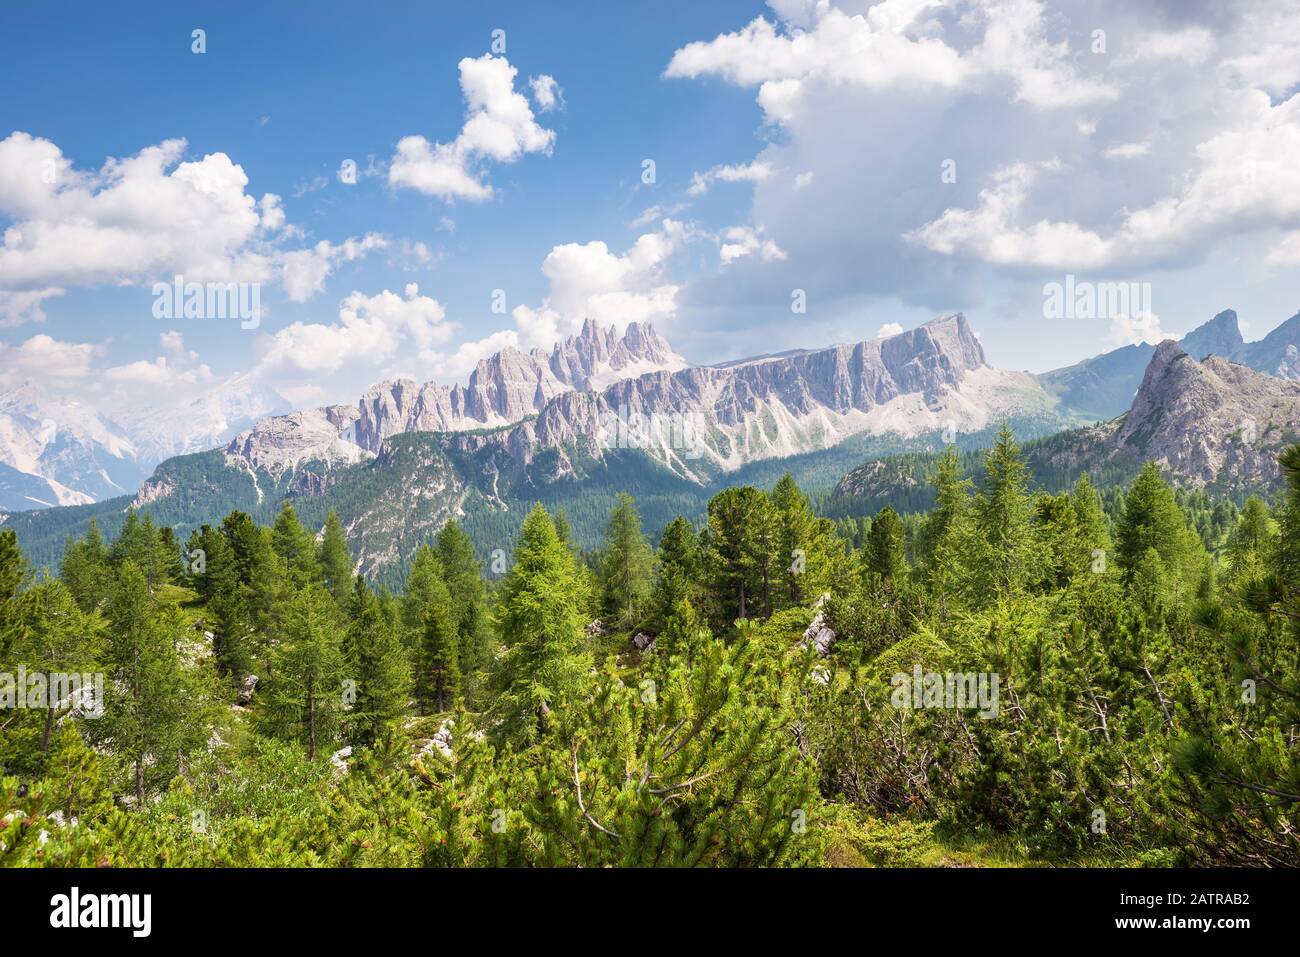 Stunning landscape image of characteristic Ampezzo massif in Dolomites mountains, Italy Stock Photo